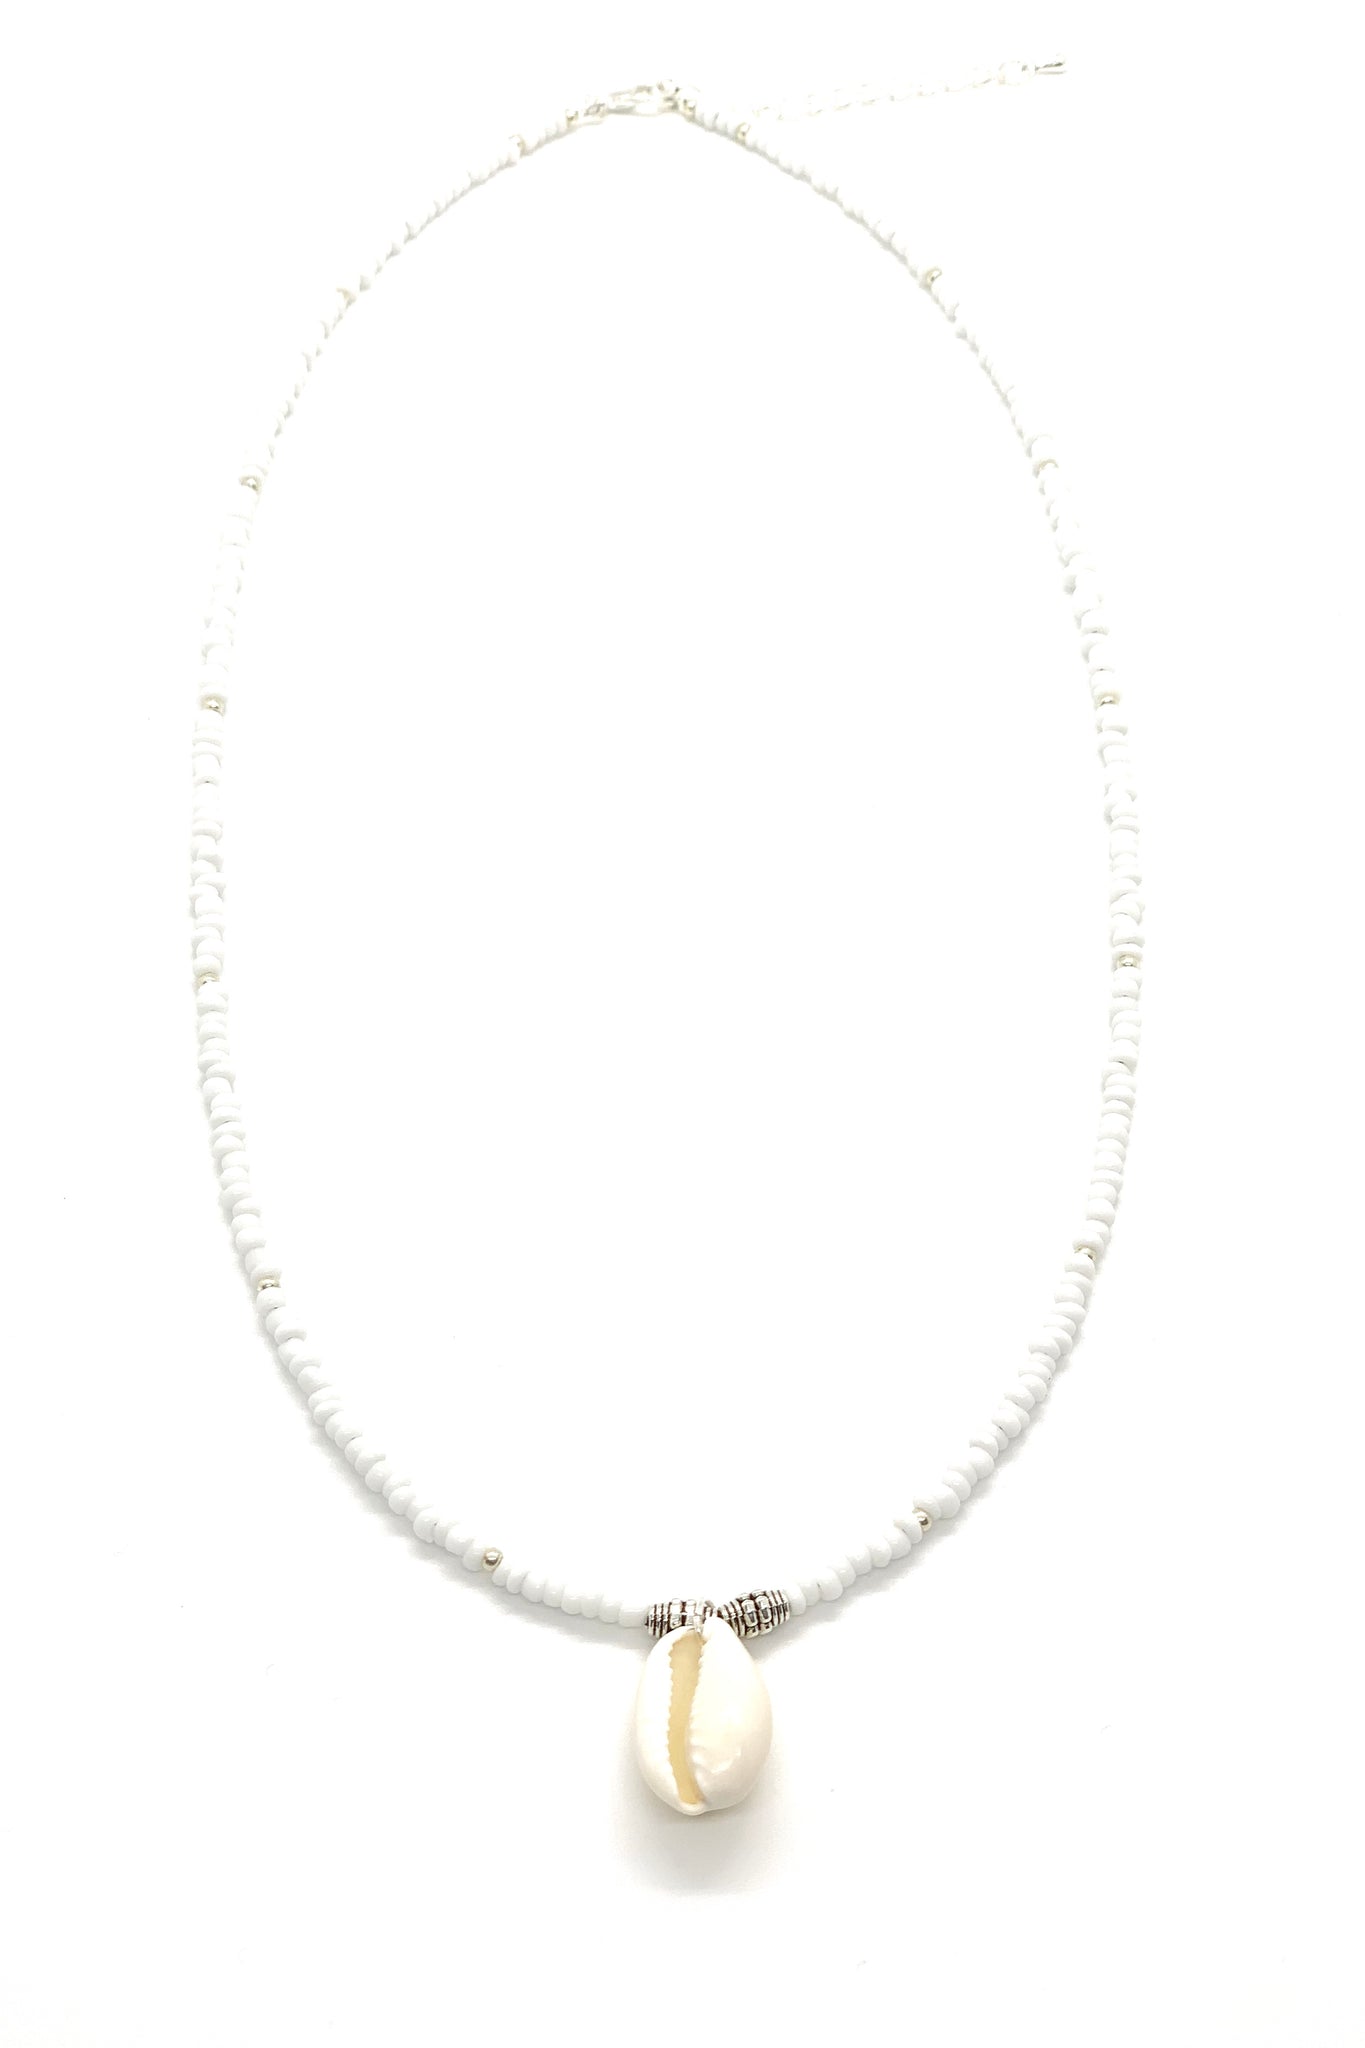 Medium long necklace Silver Shell